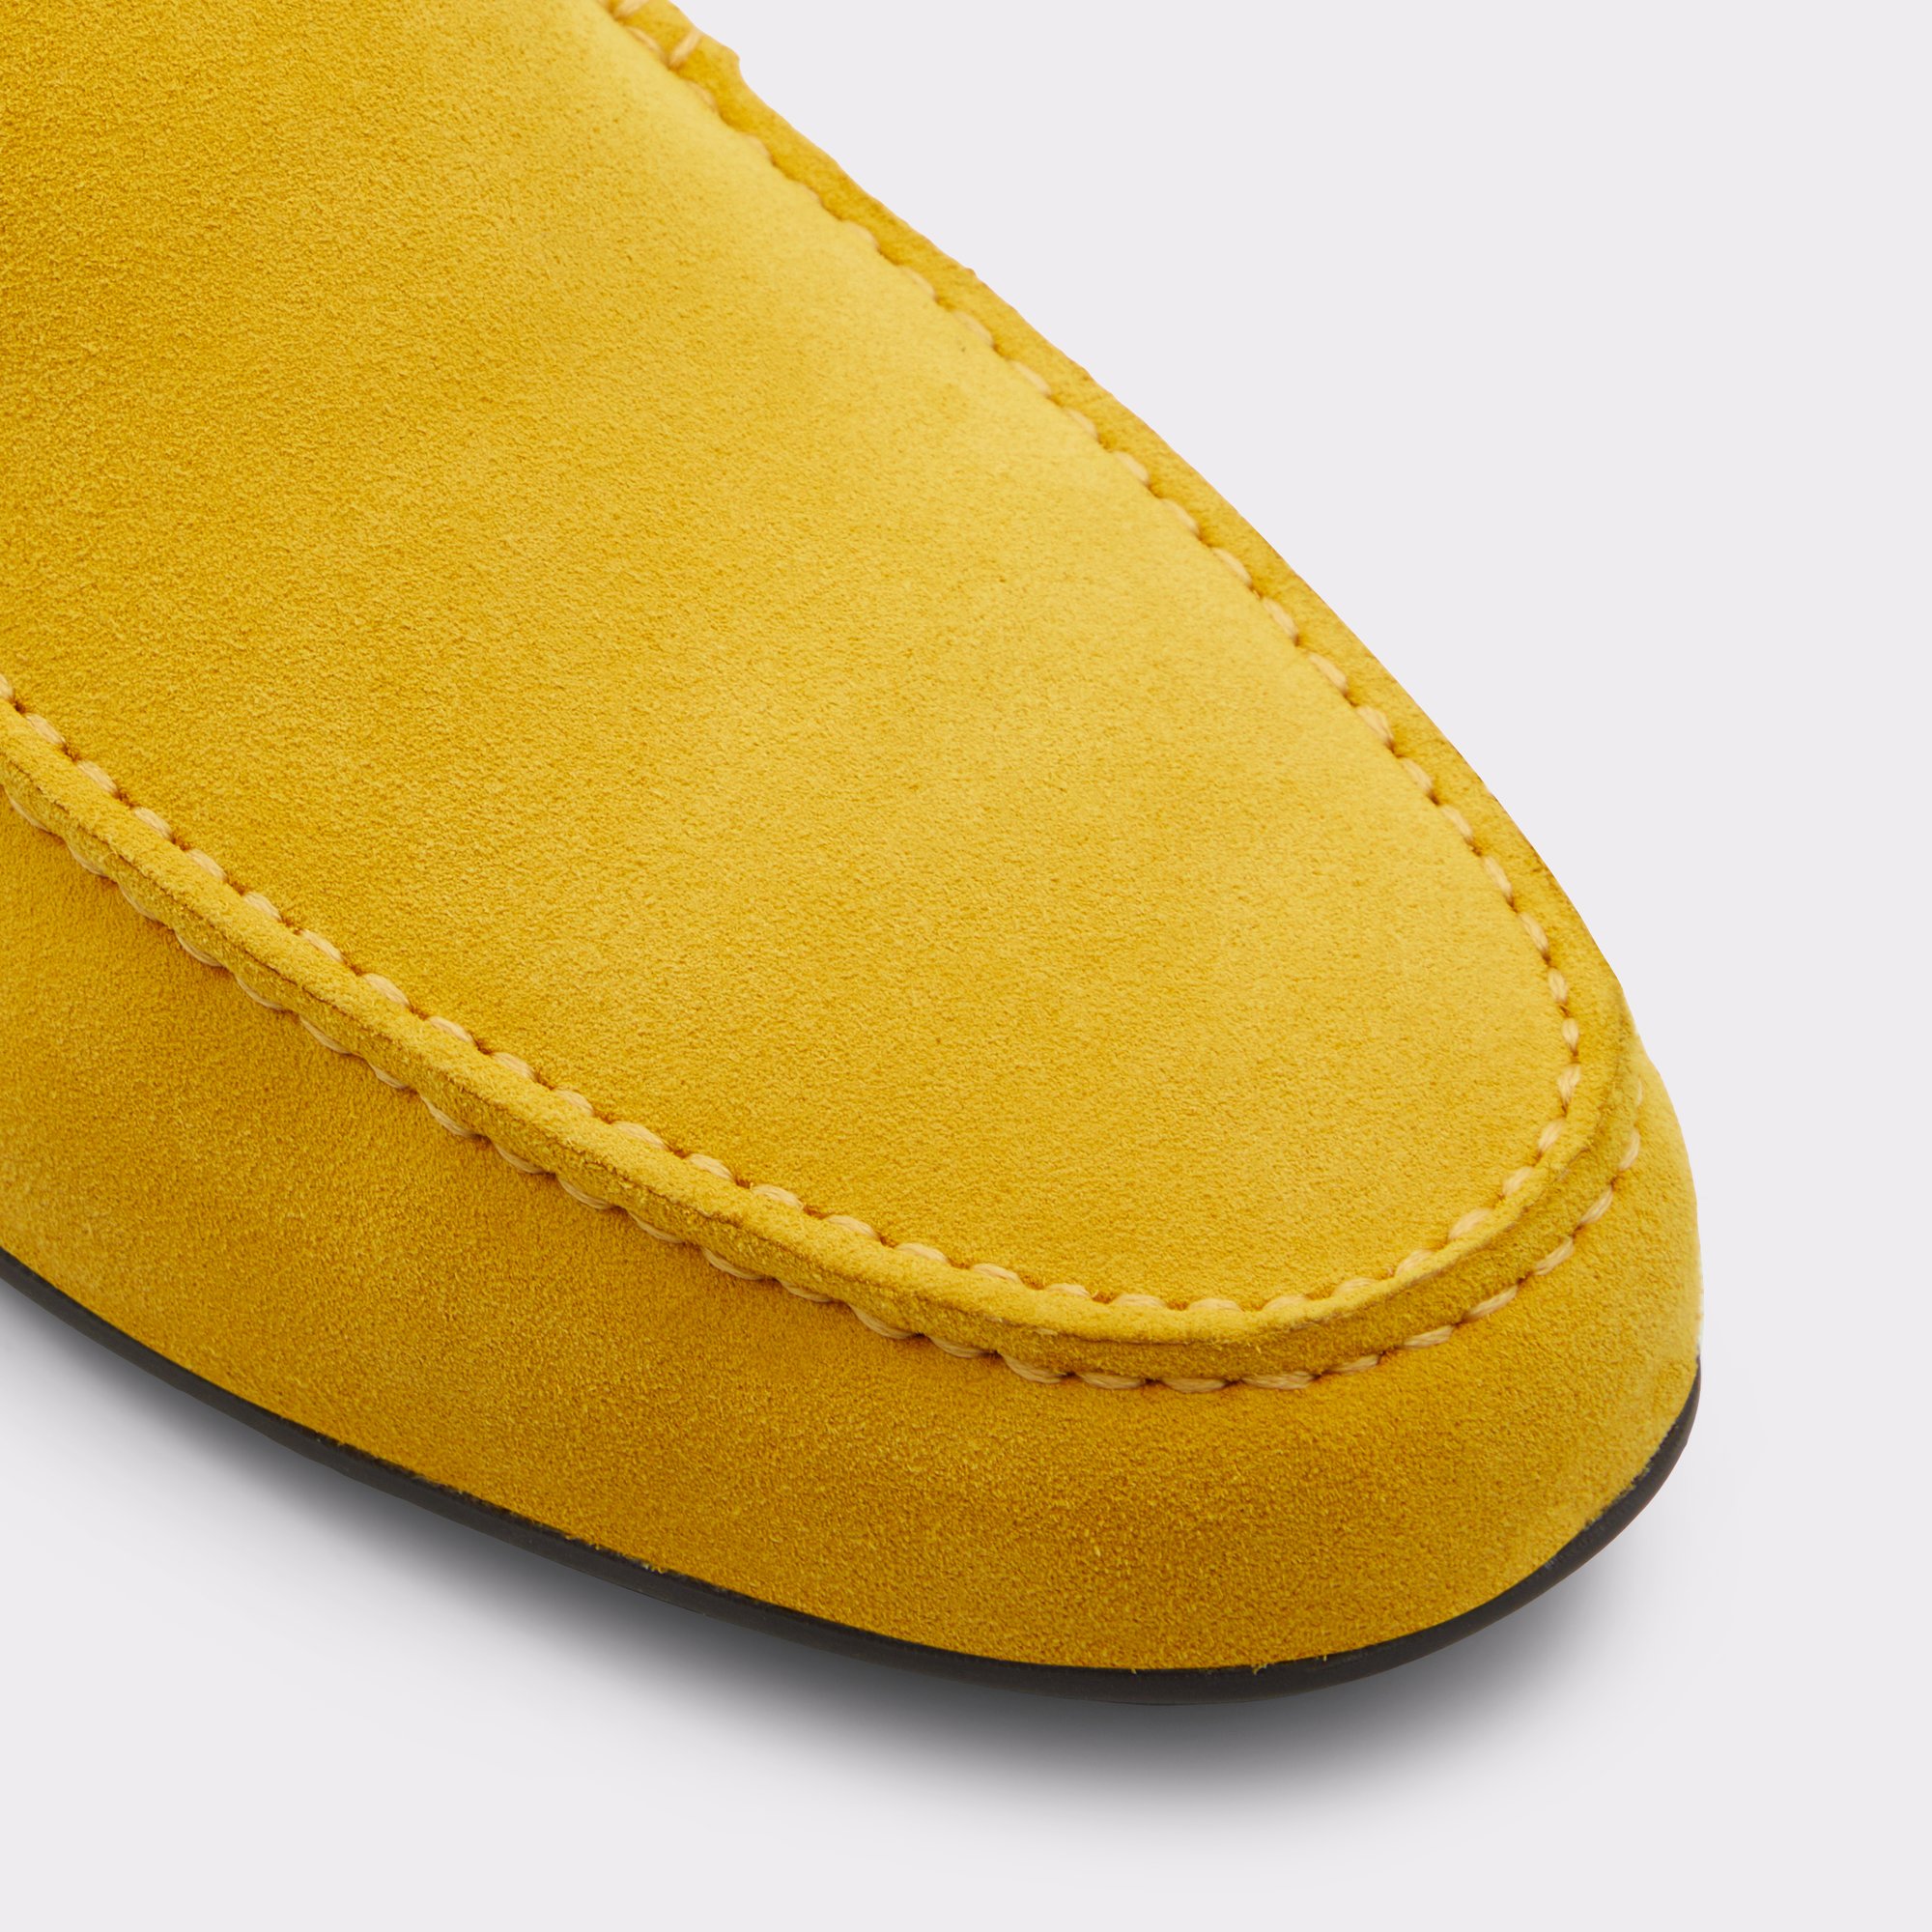 Tinos Bright Yellow Men's Casual Shoes | ALDO Canada